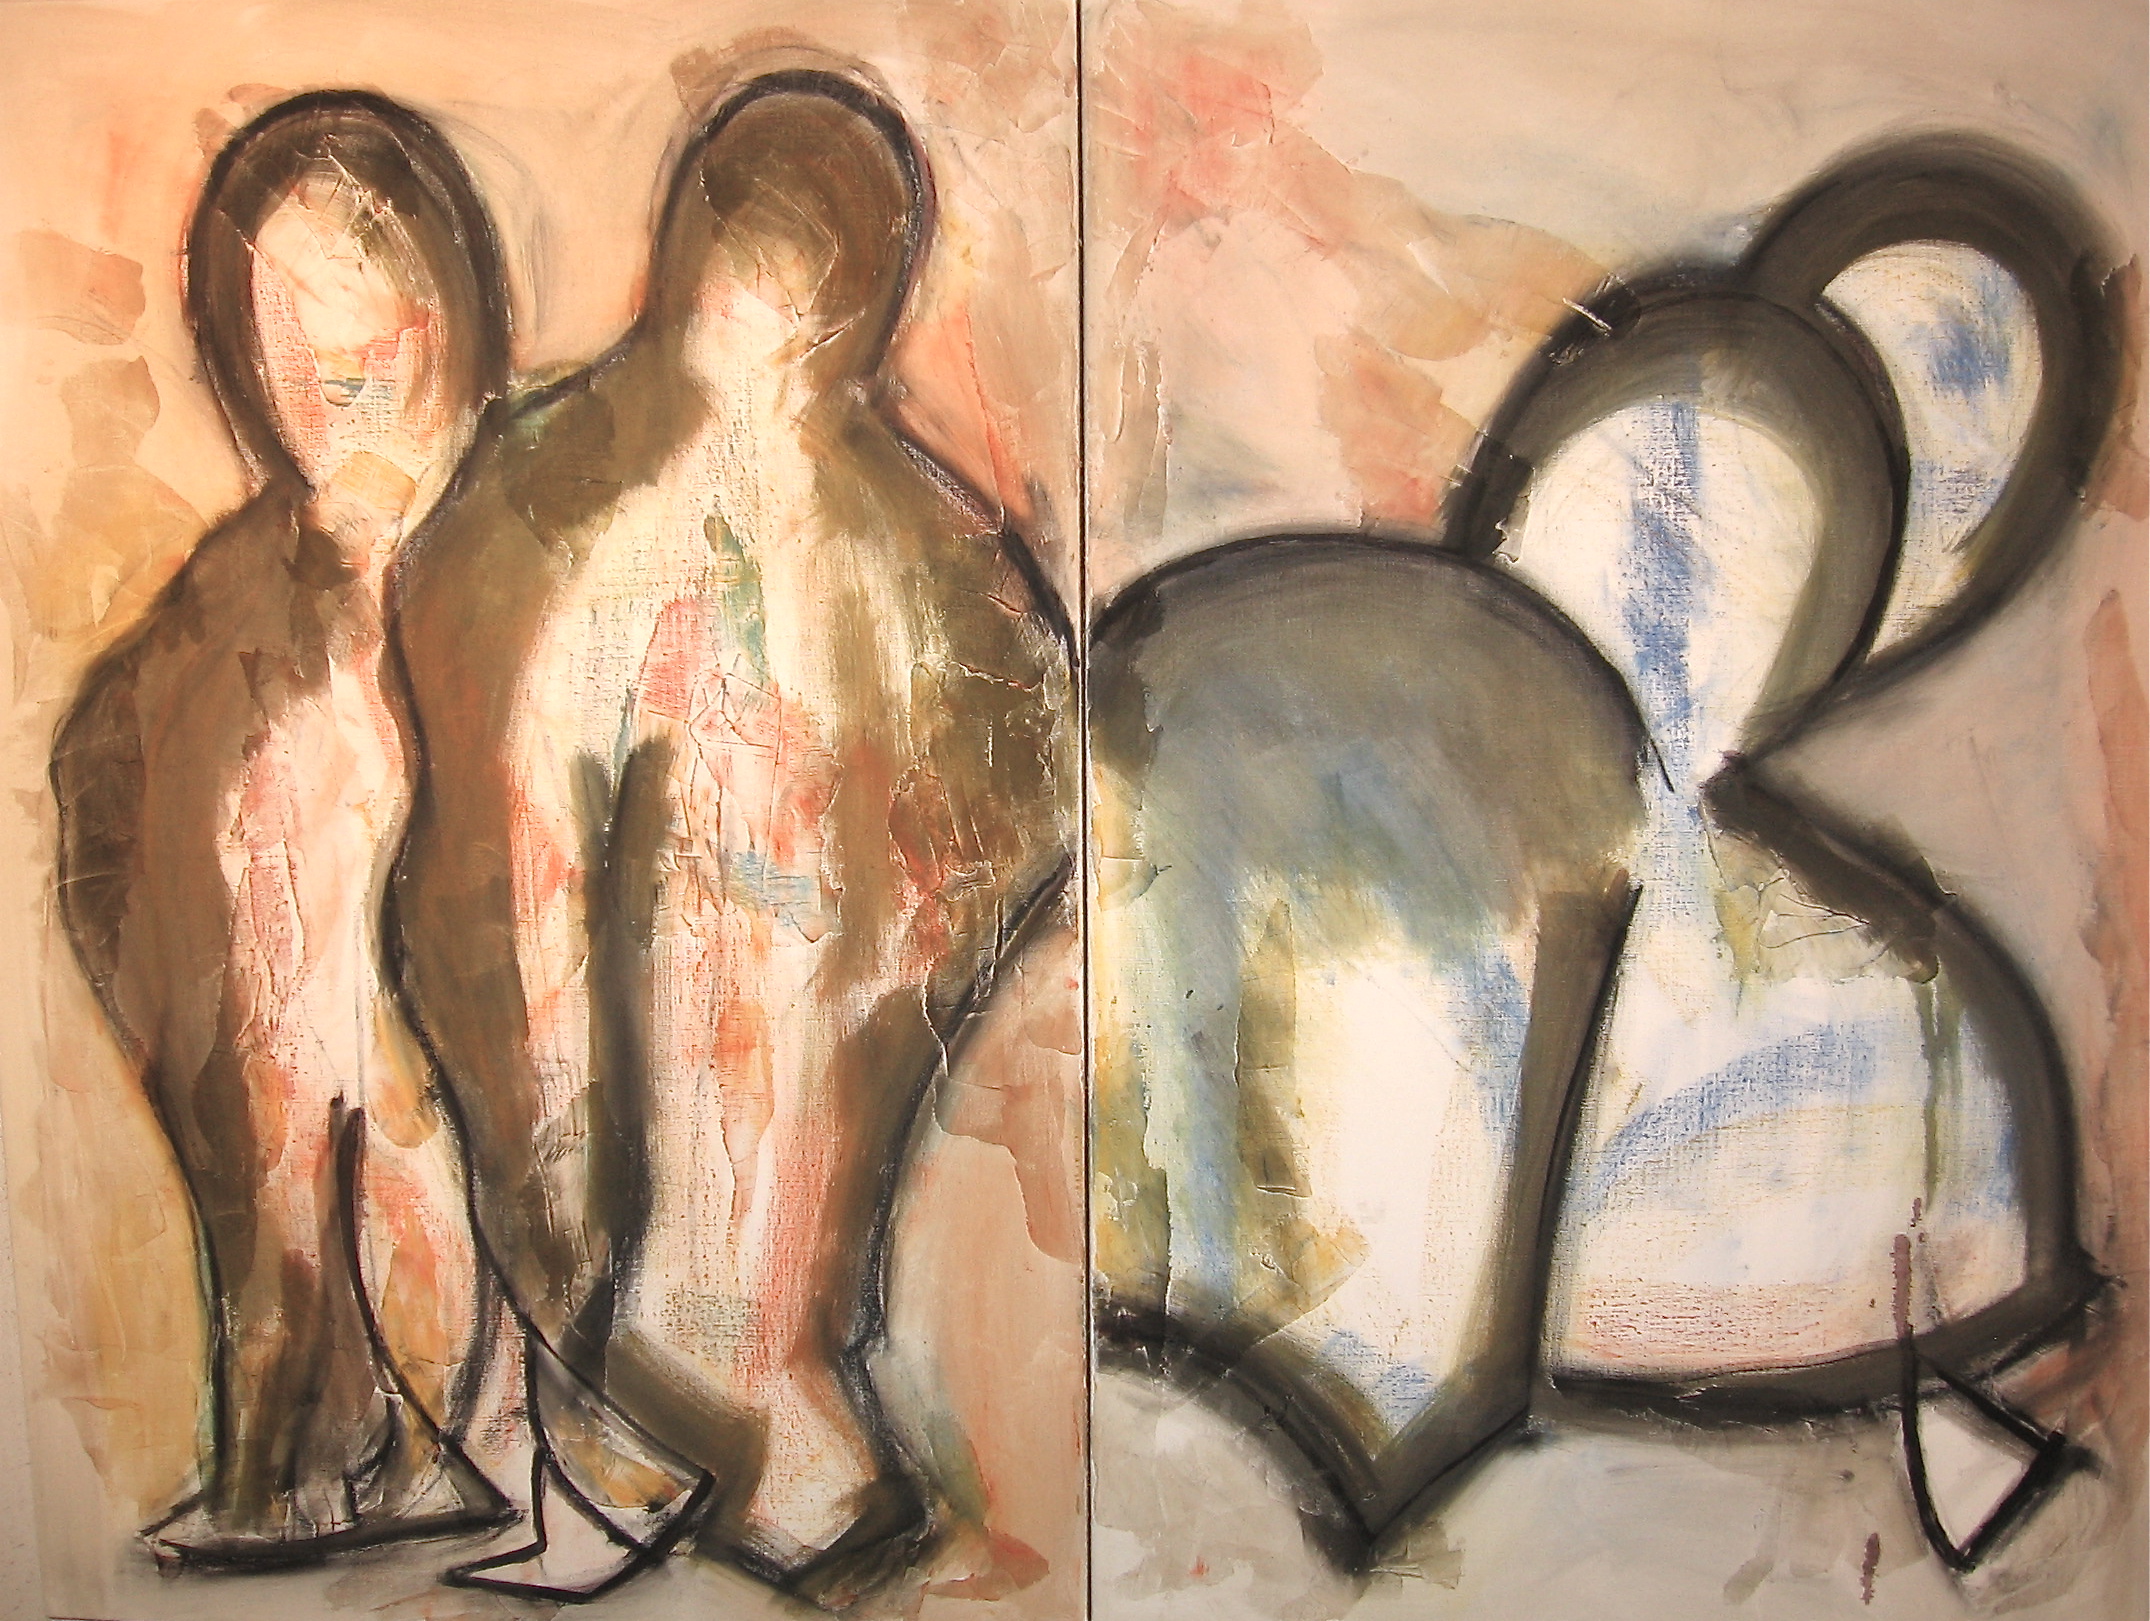 Gemini I - mixed media on canvas, diptych, Basil King, 2014